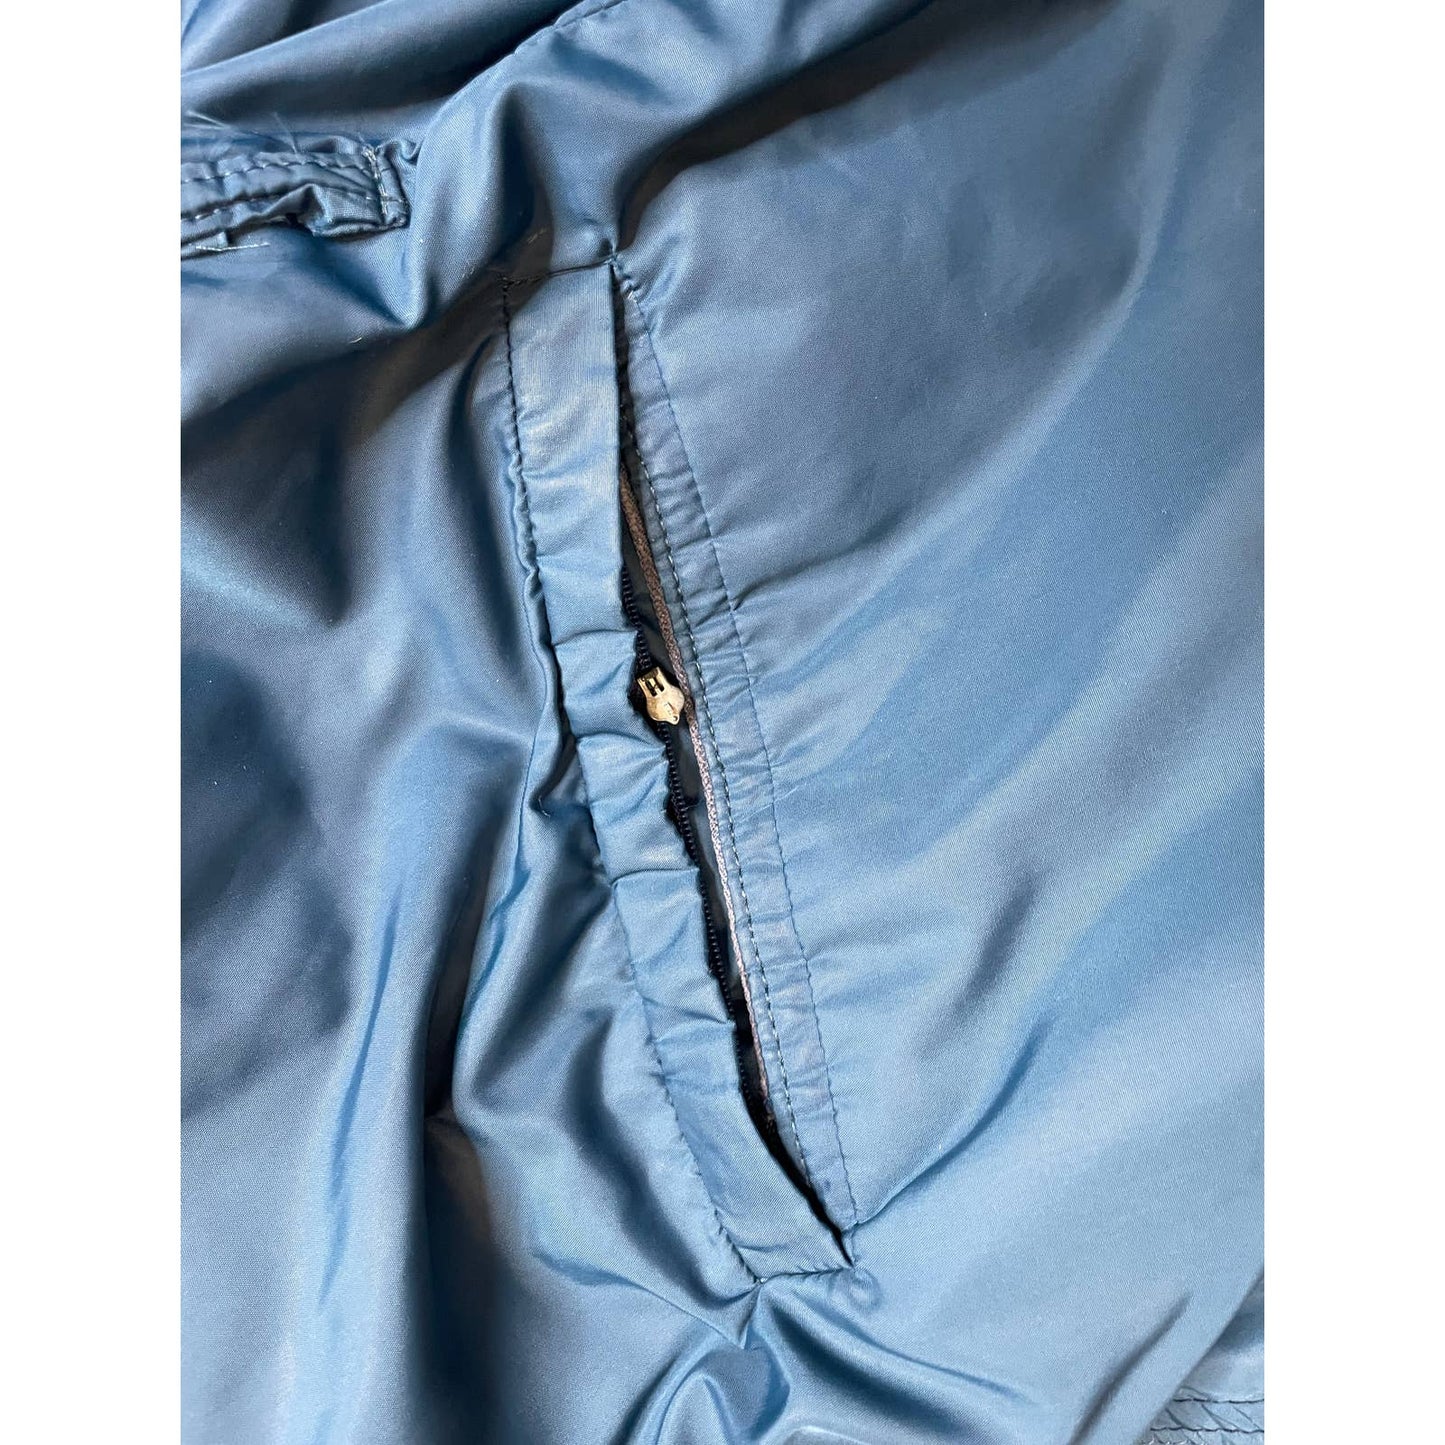 Vintage Down Puffer Jacket Mid Length Blue Teal Coat Large Top Unbranded